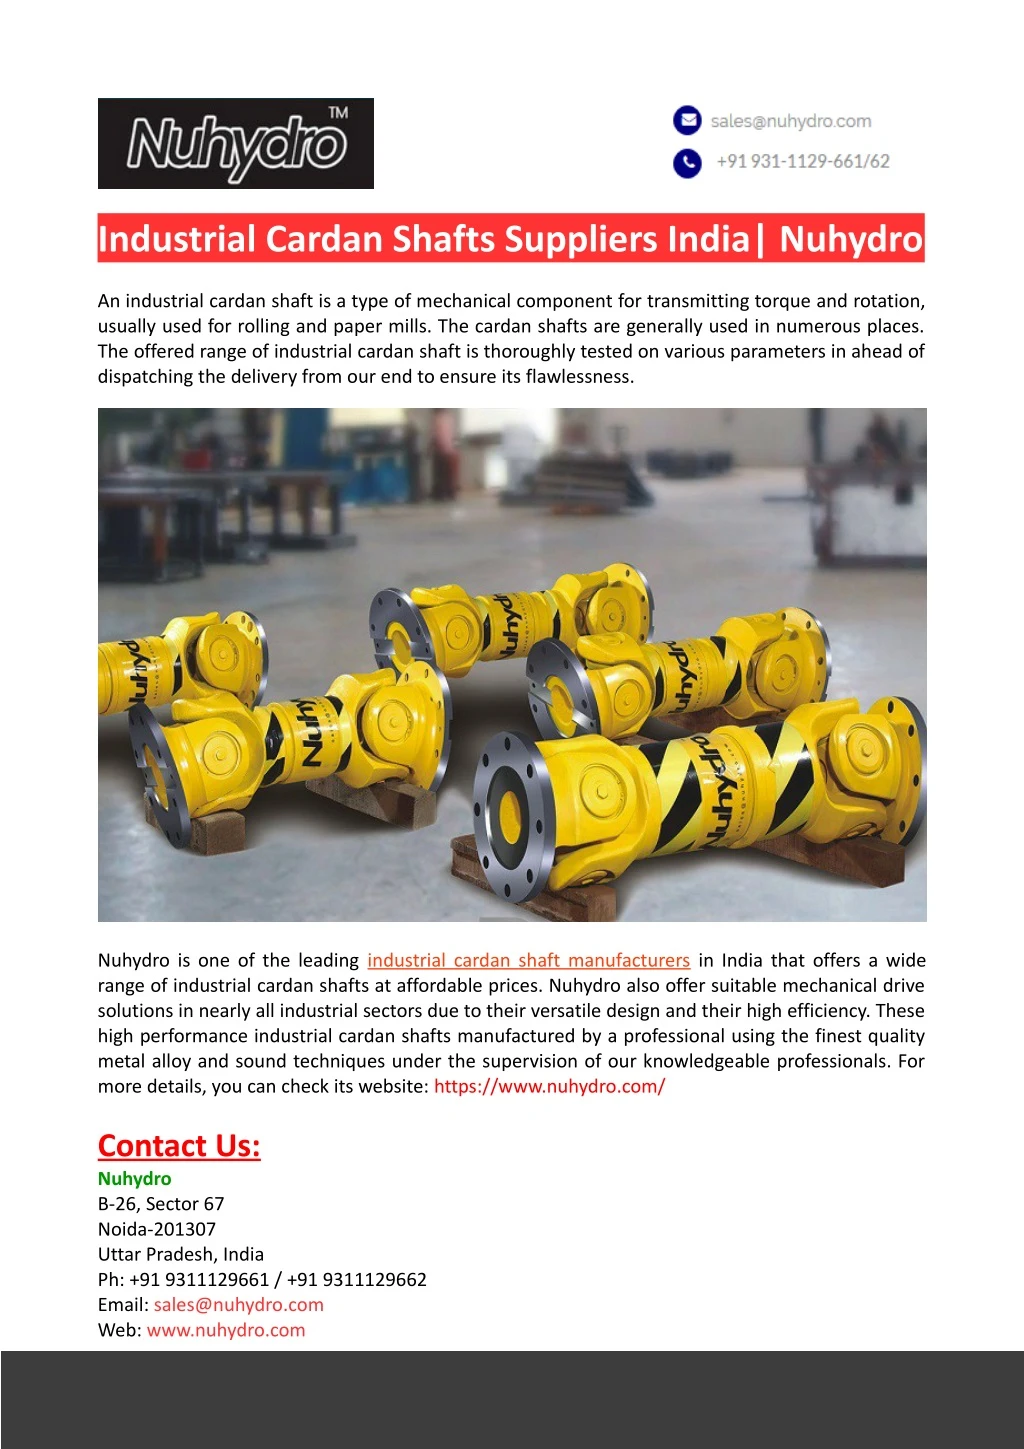 industrial cardan shafts suppliers india nuhydro n.